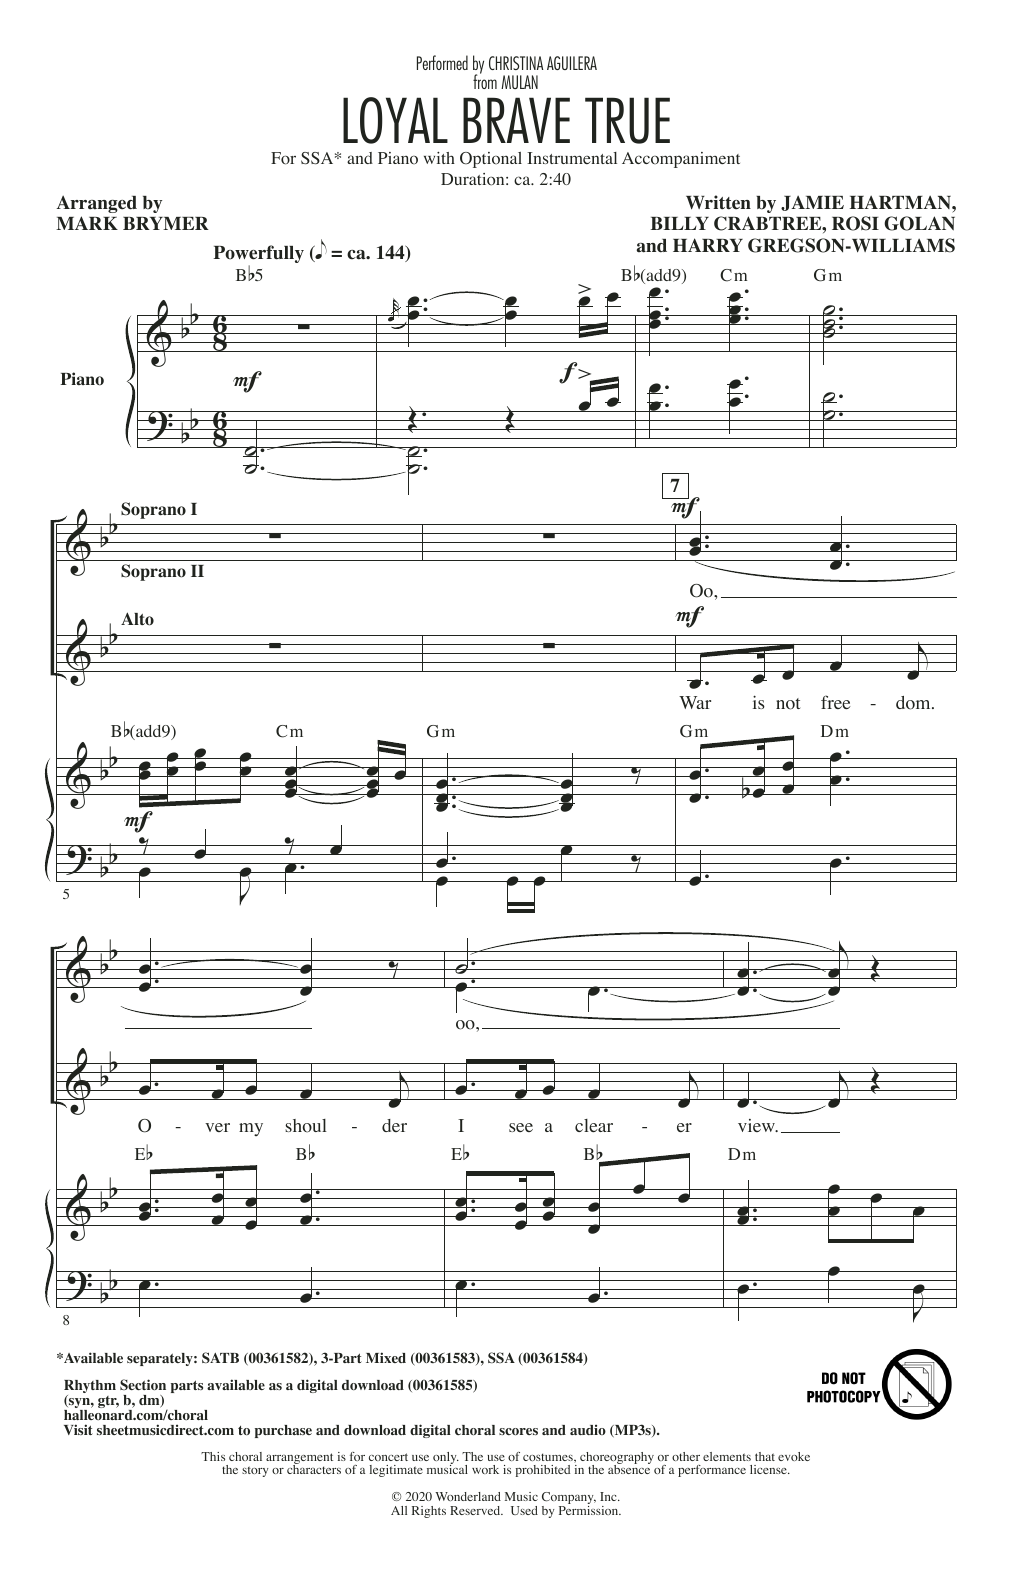 Christina Aguilera Loyal Brave True (from Mulan) (arr. Mark Brymer) Sheet Music Notes & Chords for SATB Choir - Download or Print PDF